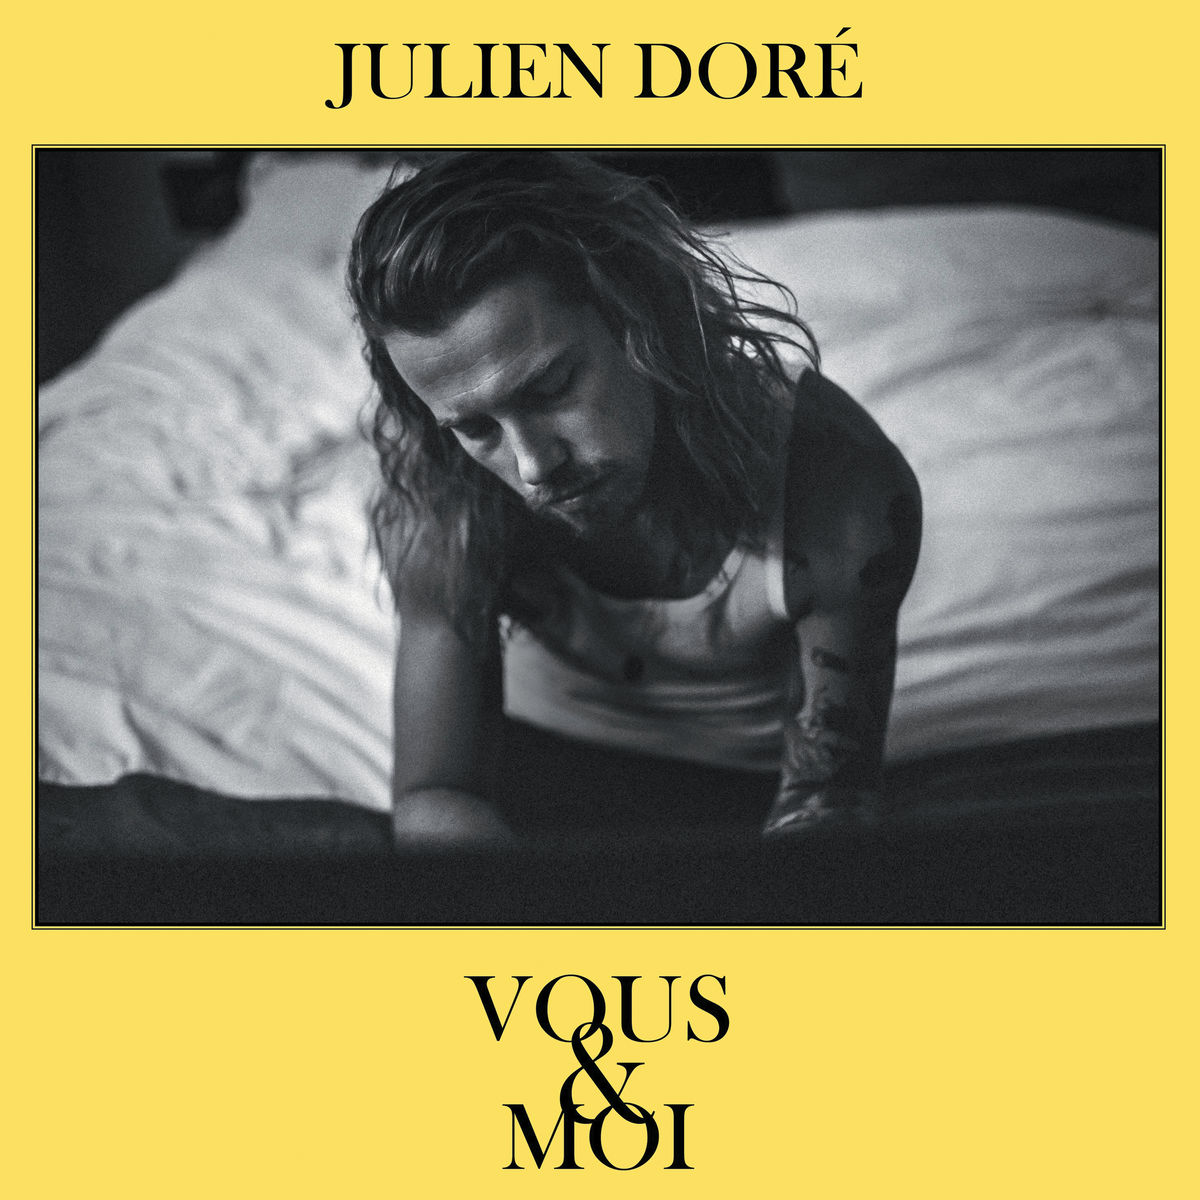 Ultratop Be Julien Dore Vous Moi